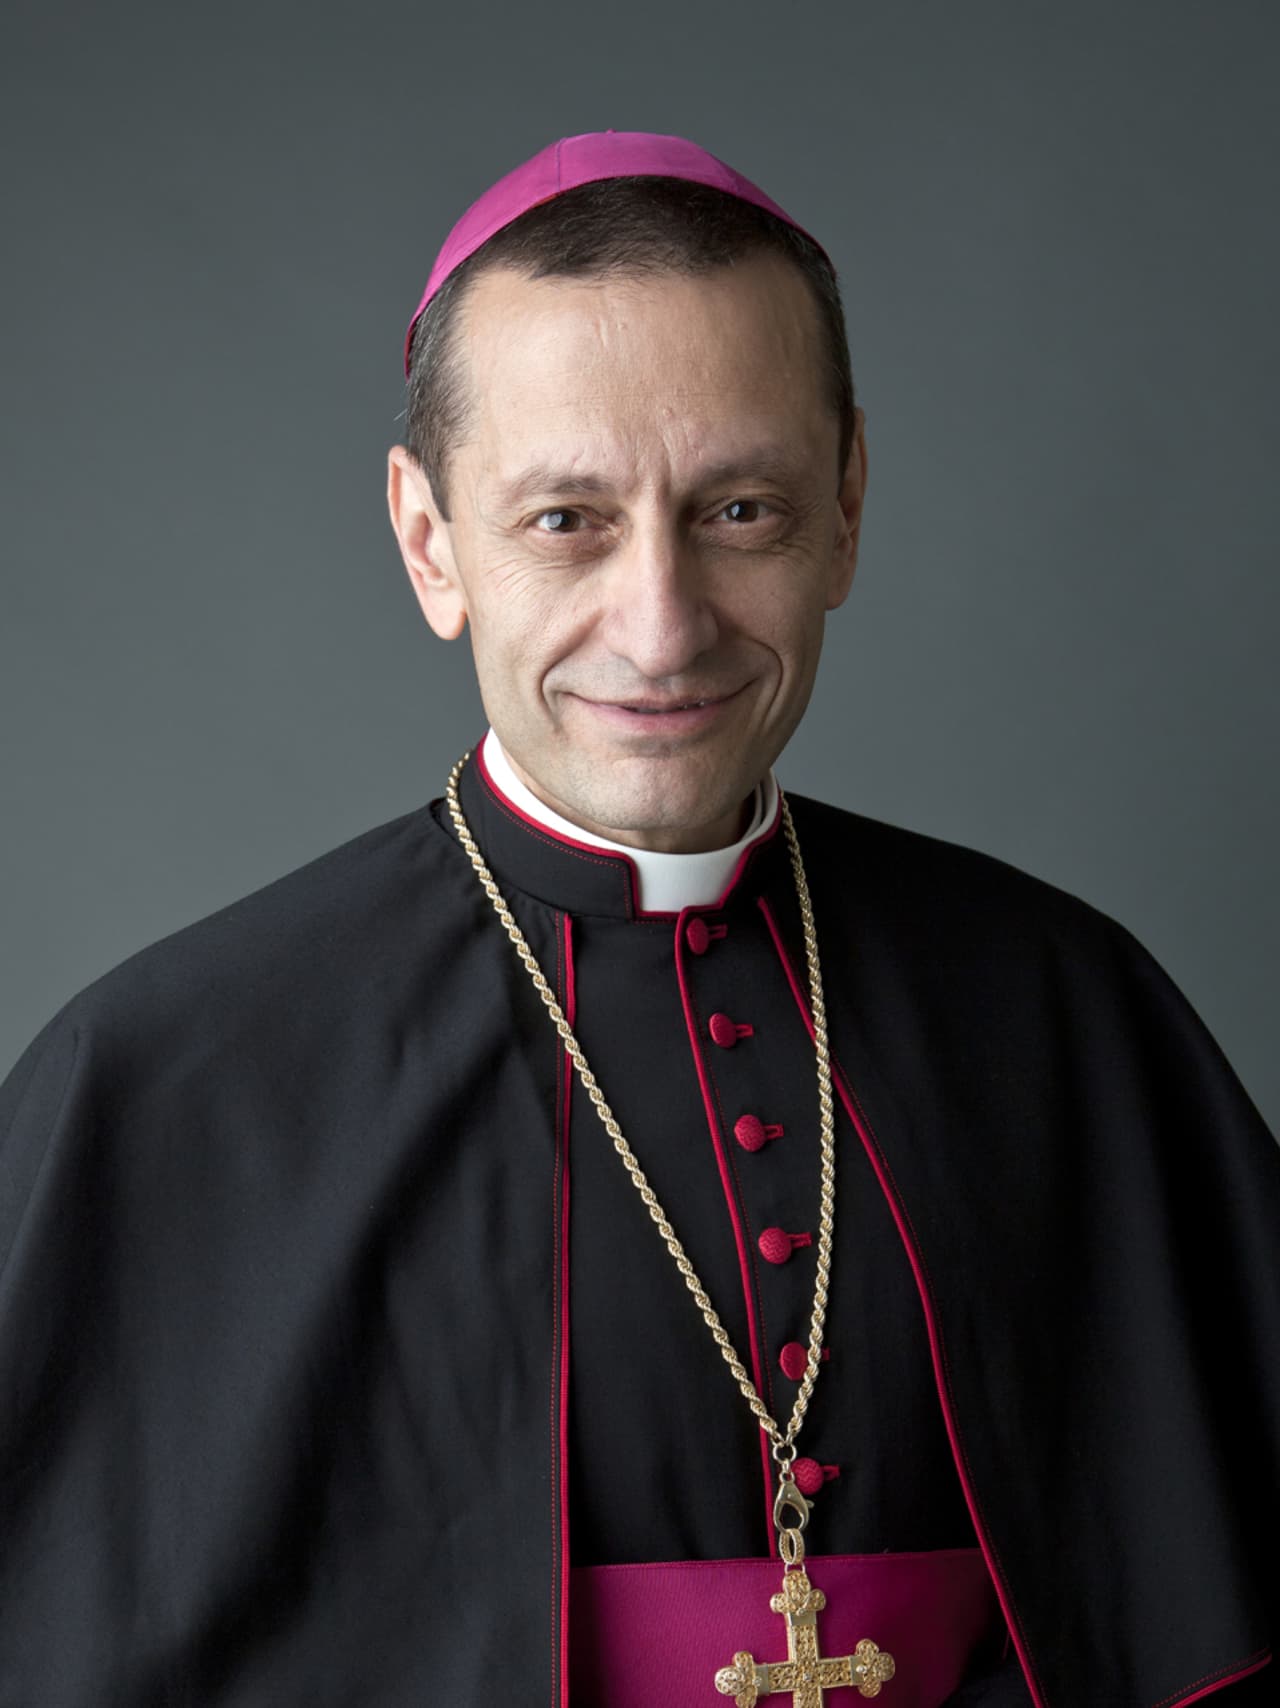 Bishop Frank J. Caggiano